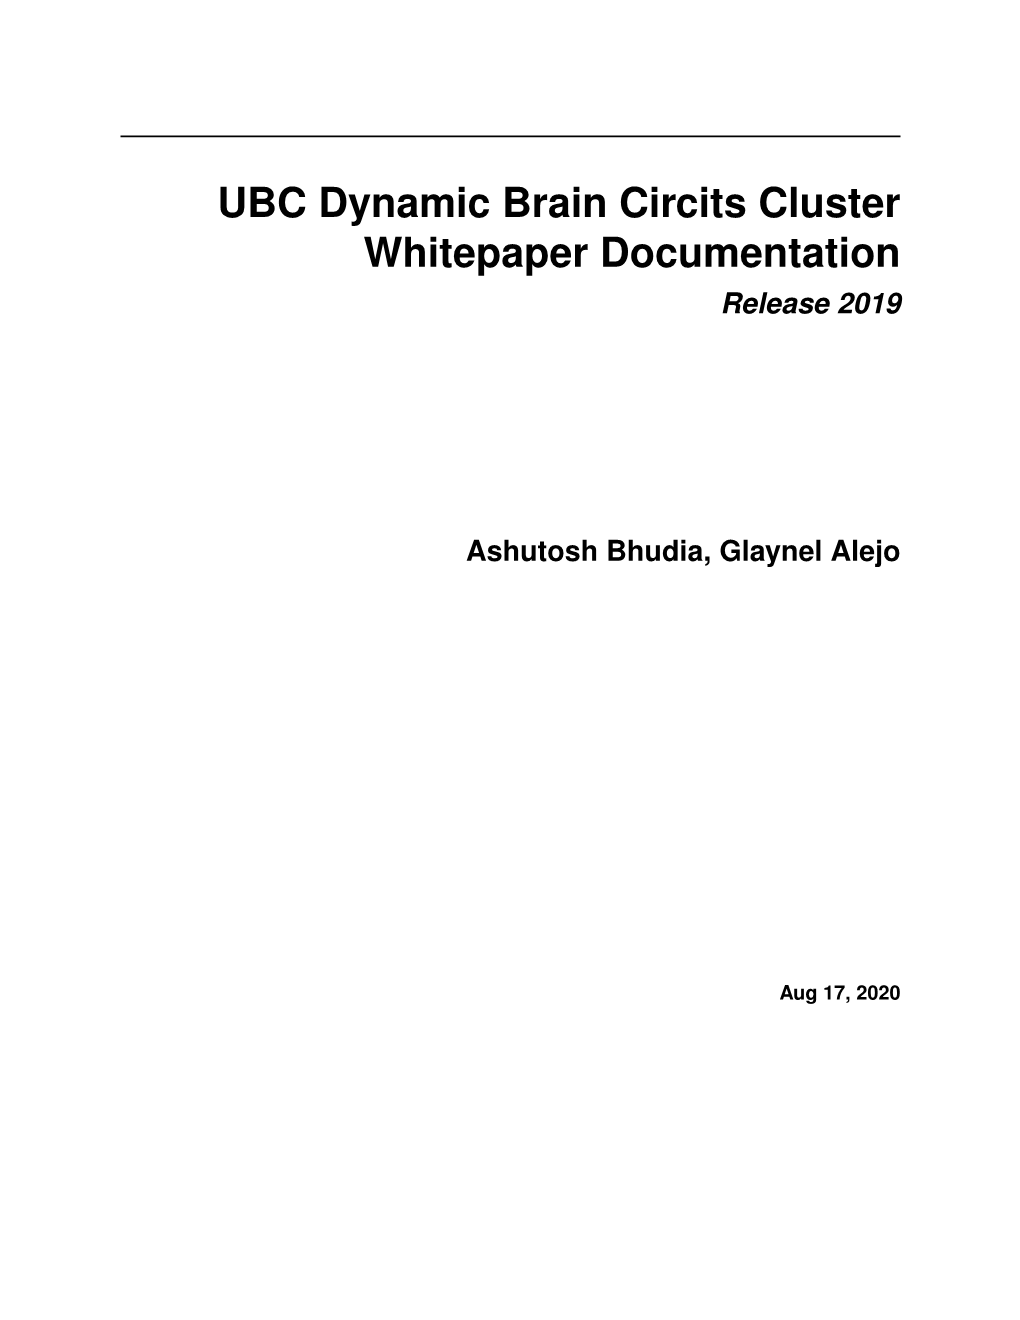 UBC Dynamic Brain Circits Cluster Whitepaper Documentation Release 2019